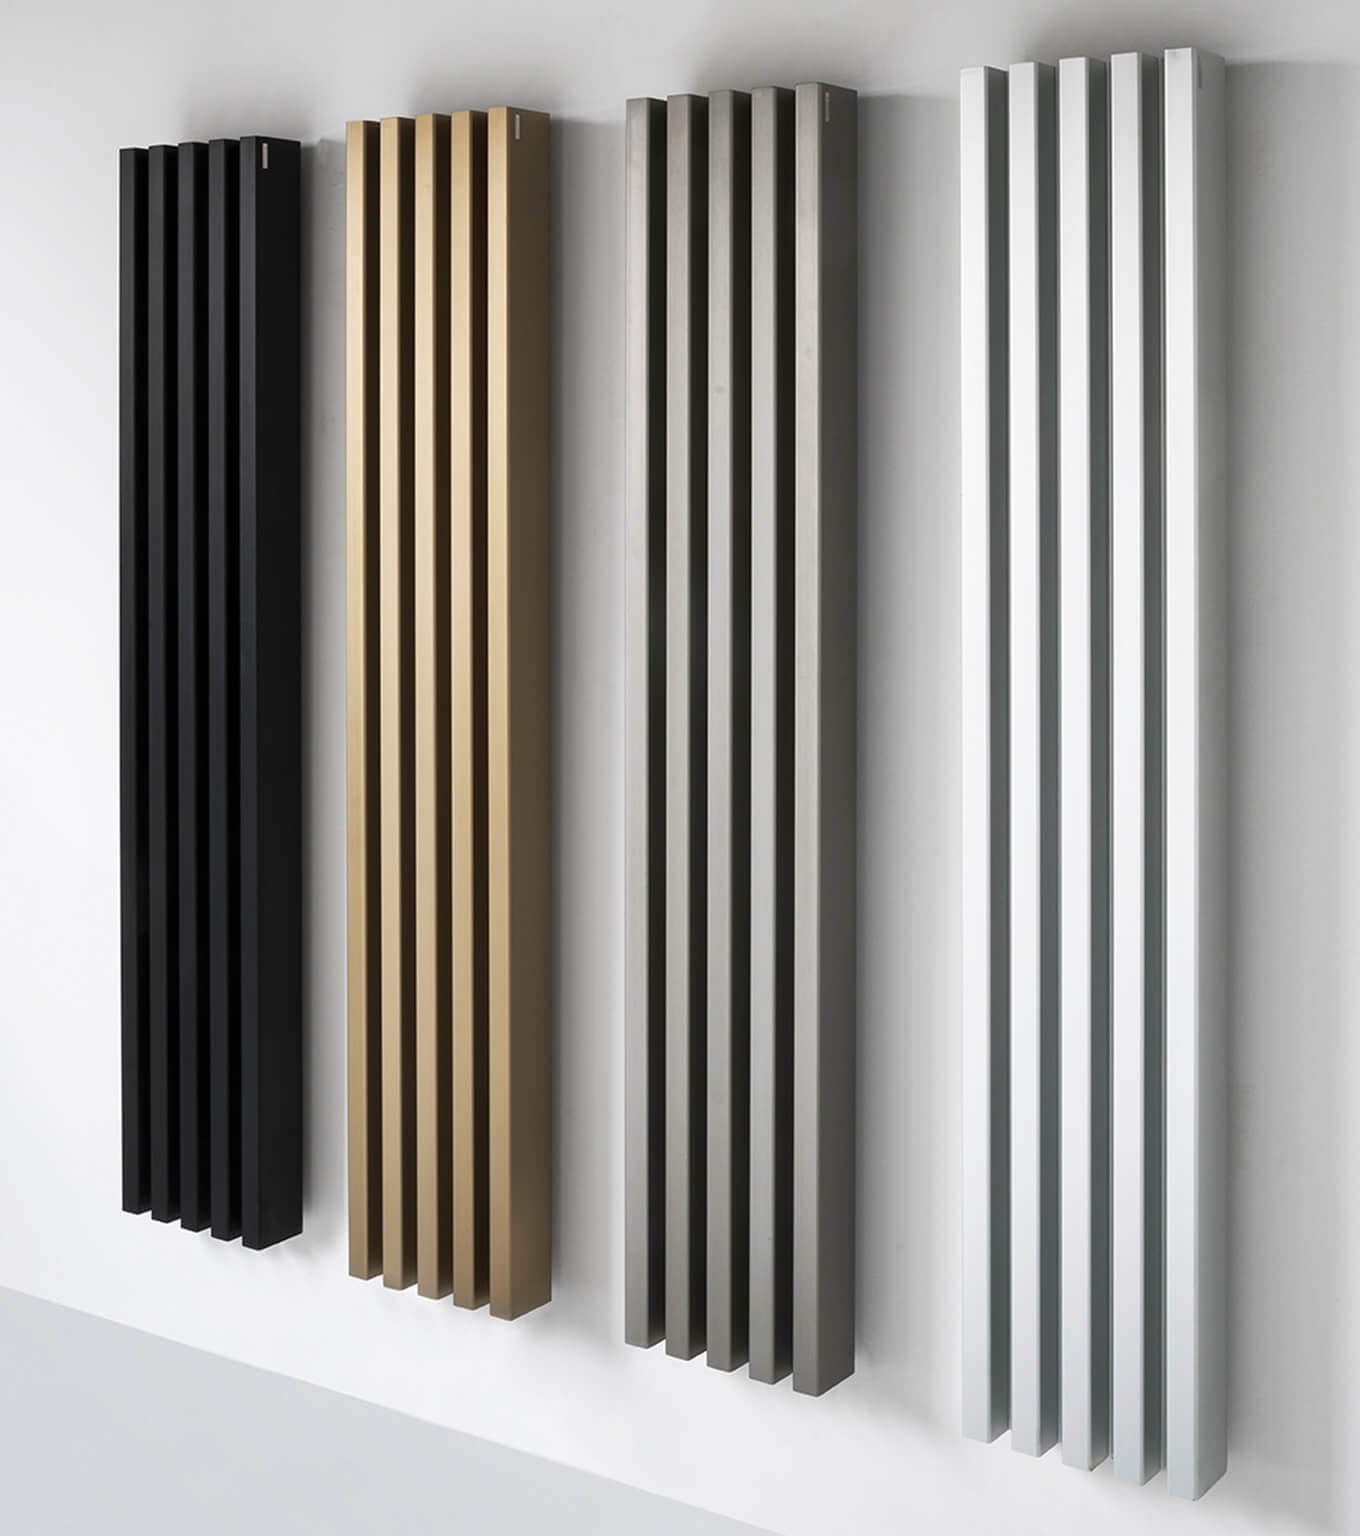 Soho radiator design options